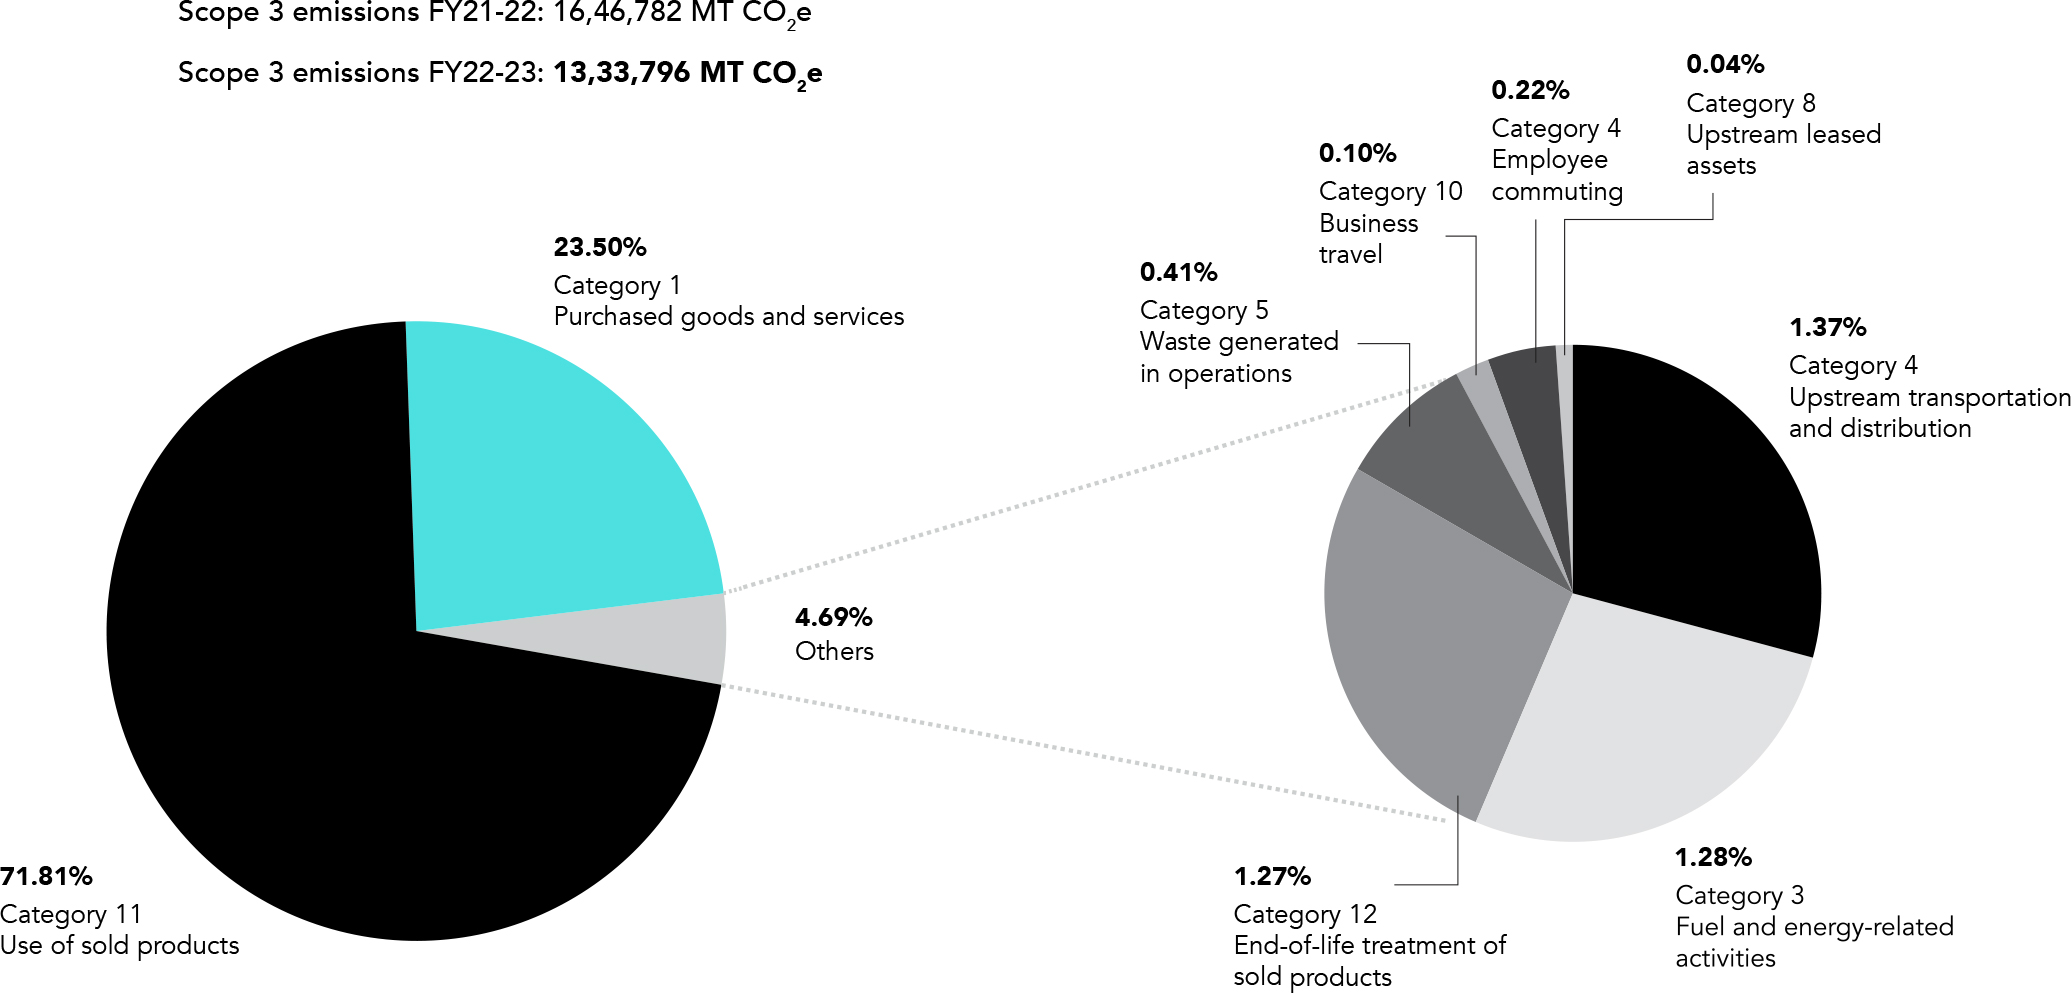 Scope 3 emissions (metric tonnes CO2 equivalent) - Global FY22-23